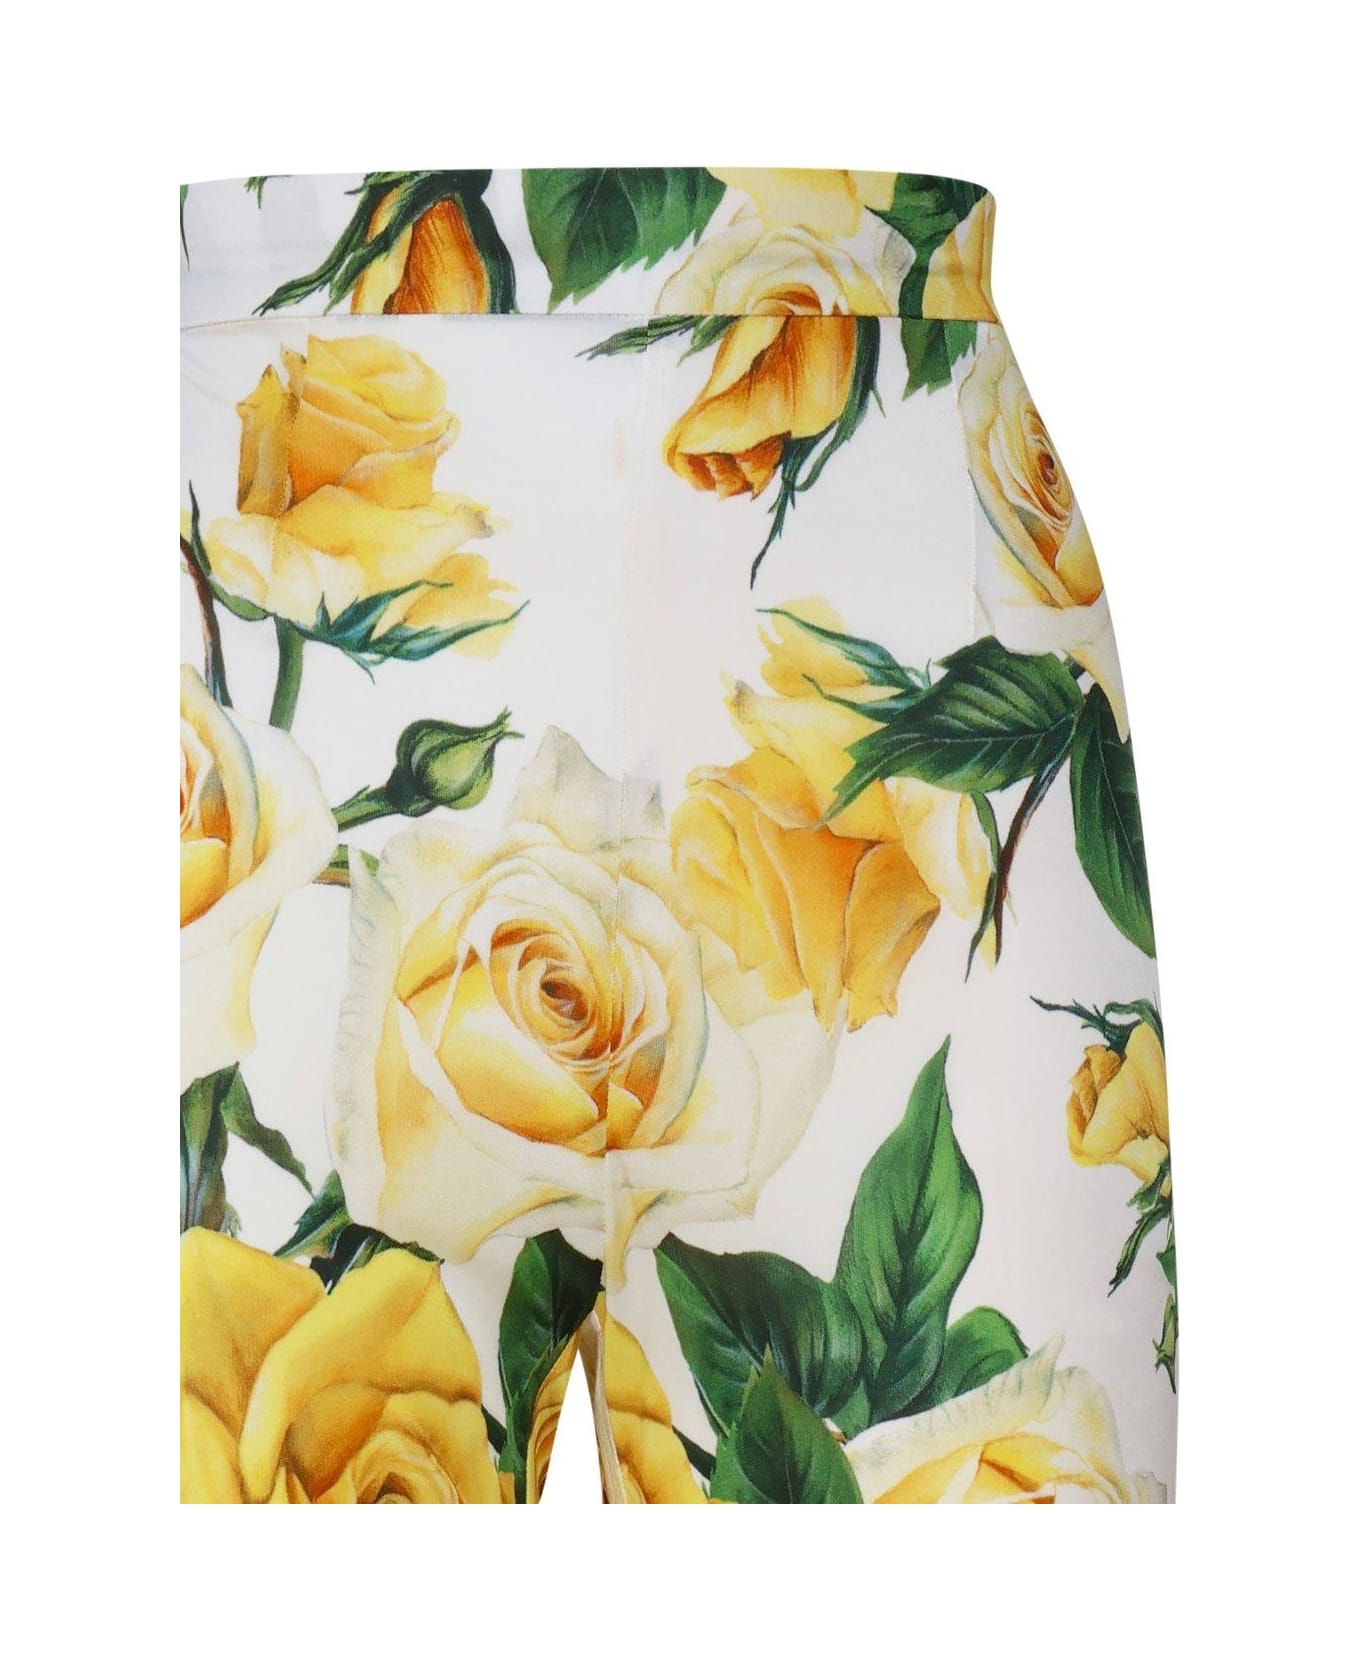 Dolce & Gabbana Rose Printed High Waist Pants - Yellow, green, white